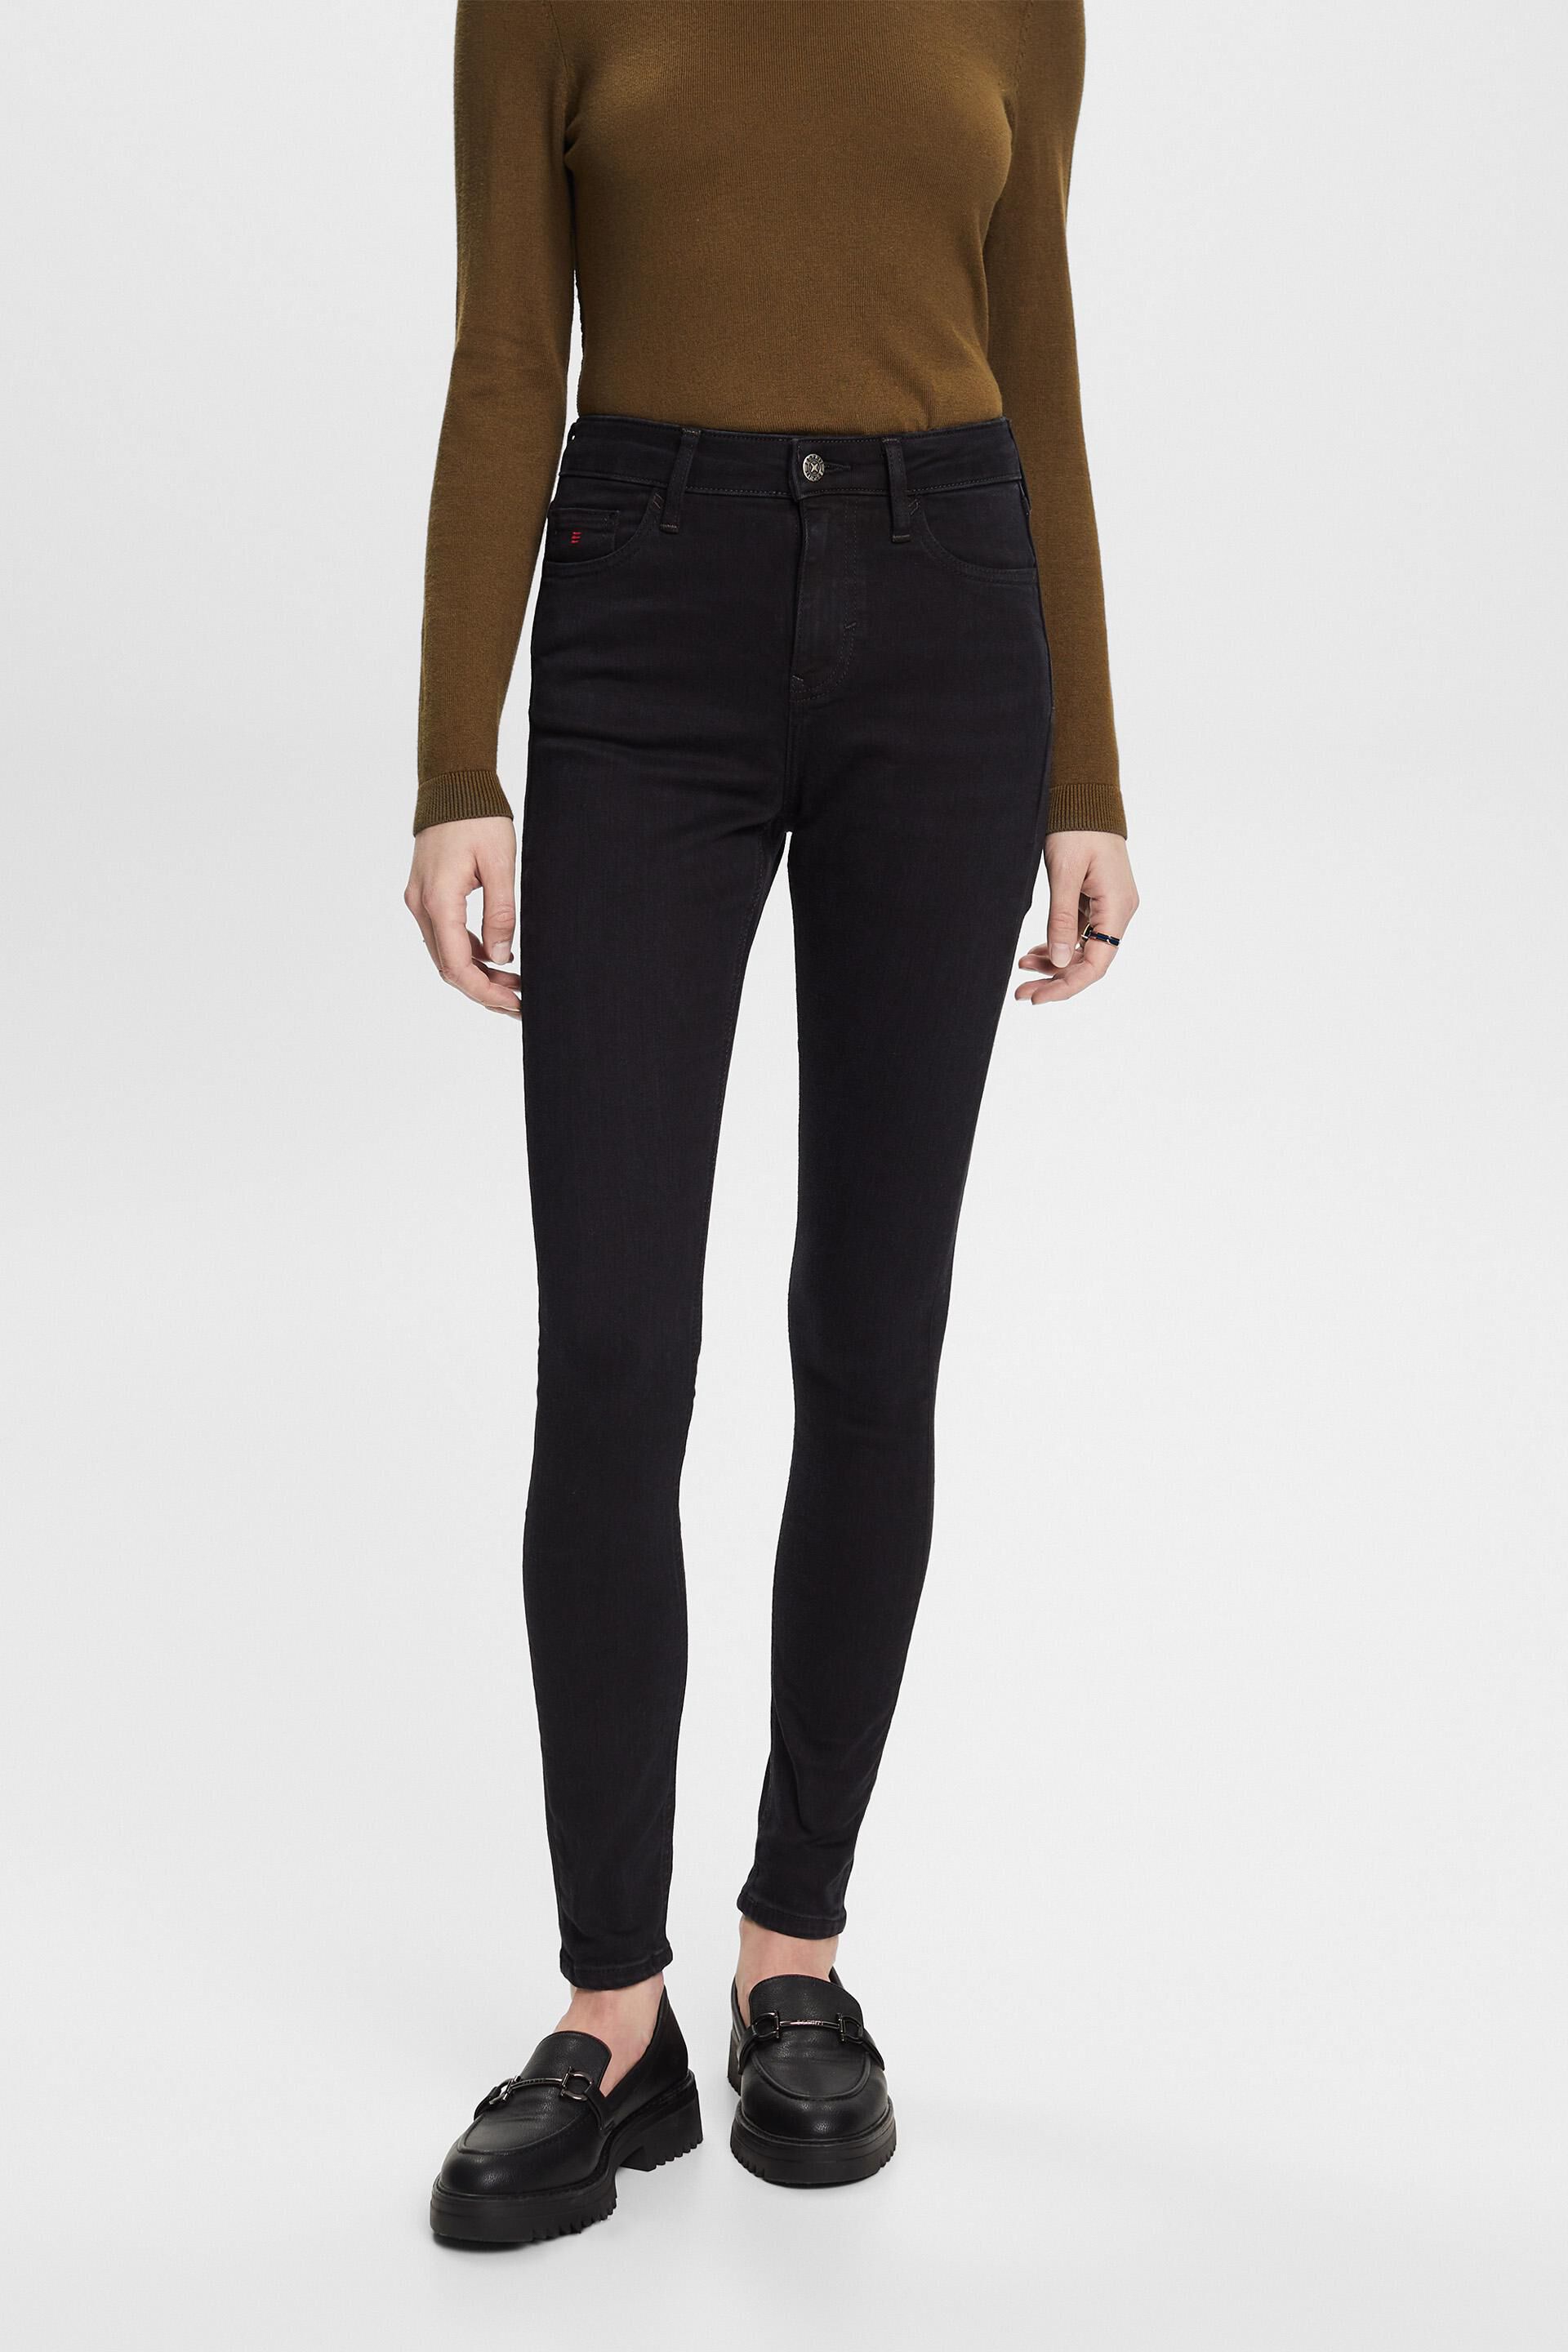 Esprit Damen Premium high-rise skinny jeans fit